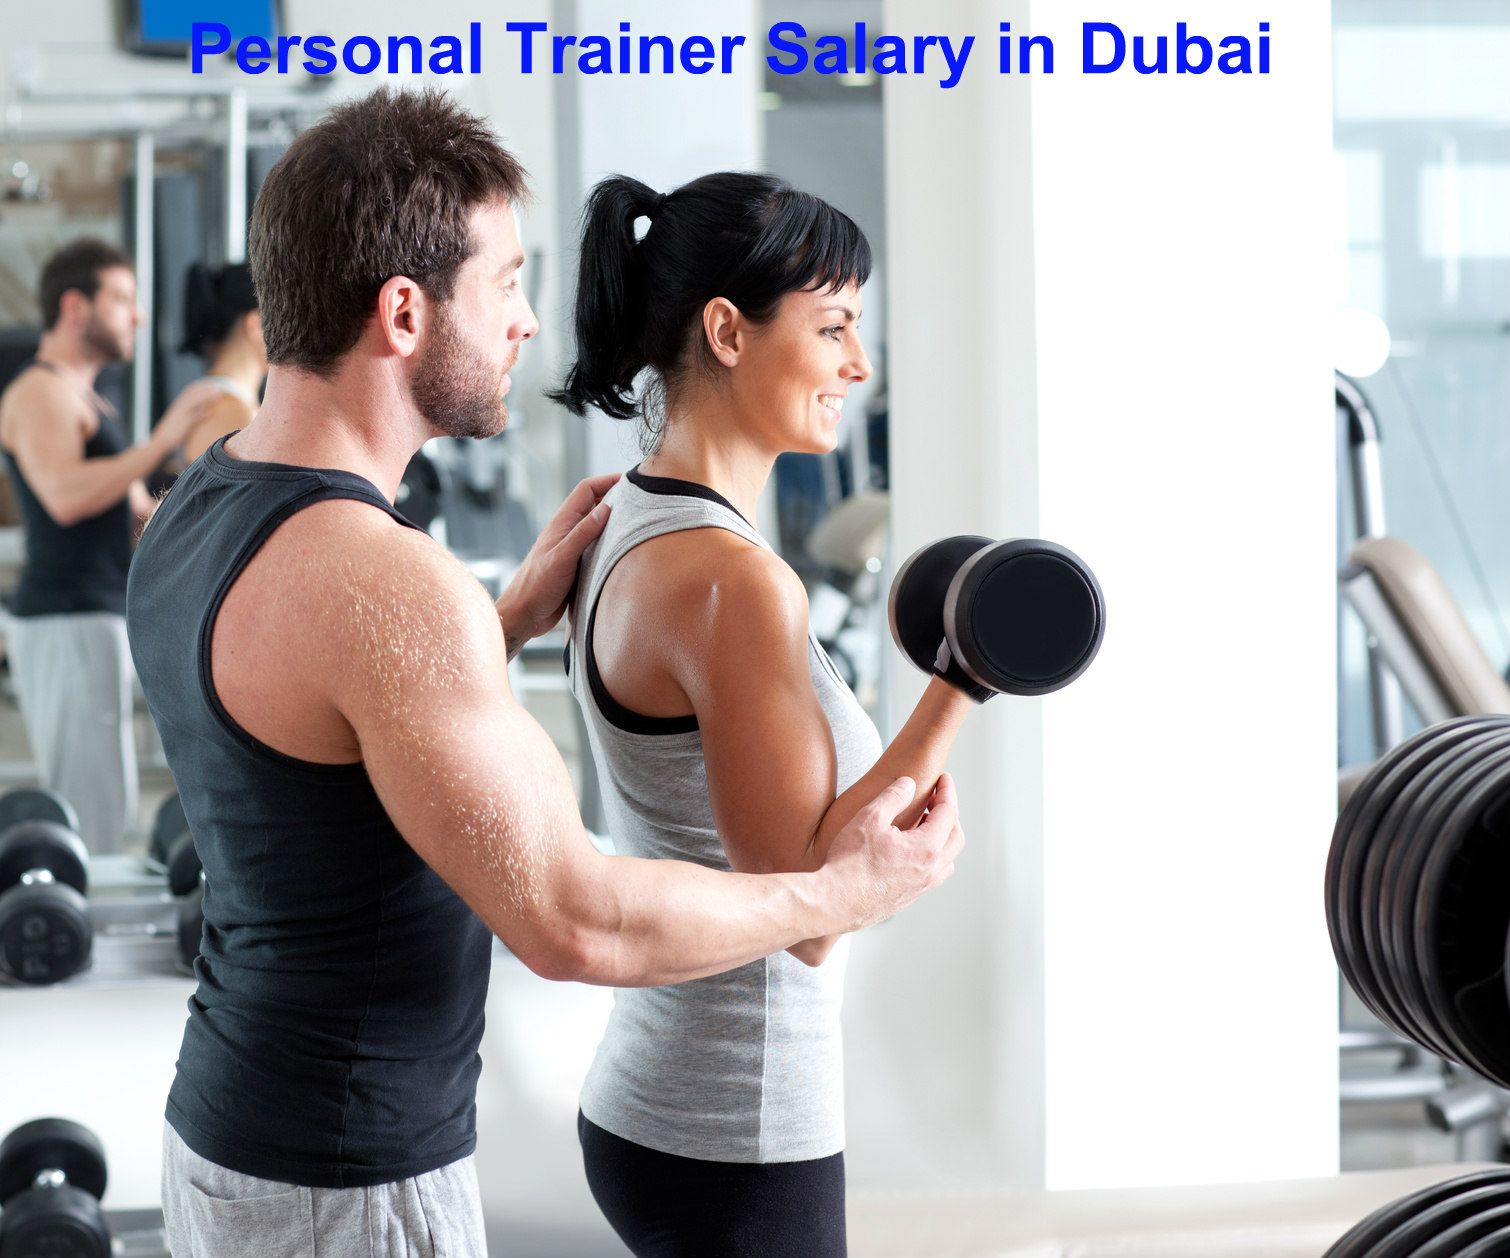 Personal Trainer Salary In Dubai